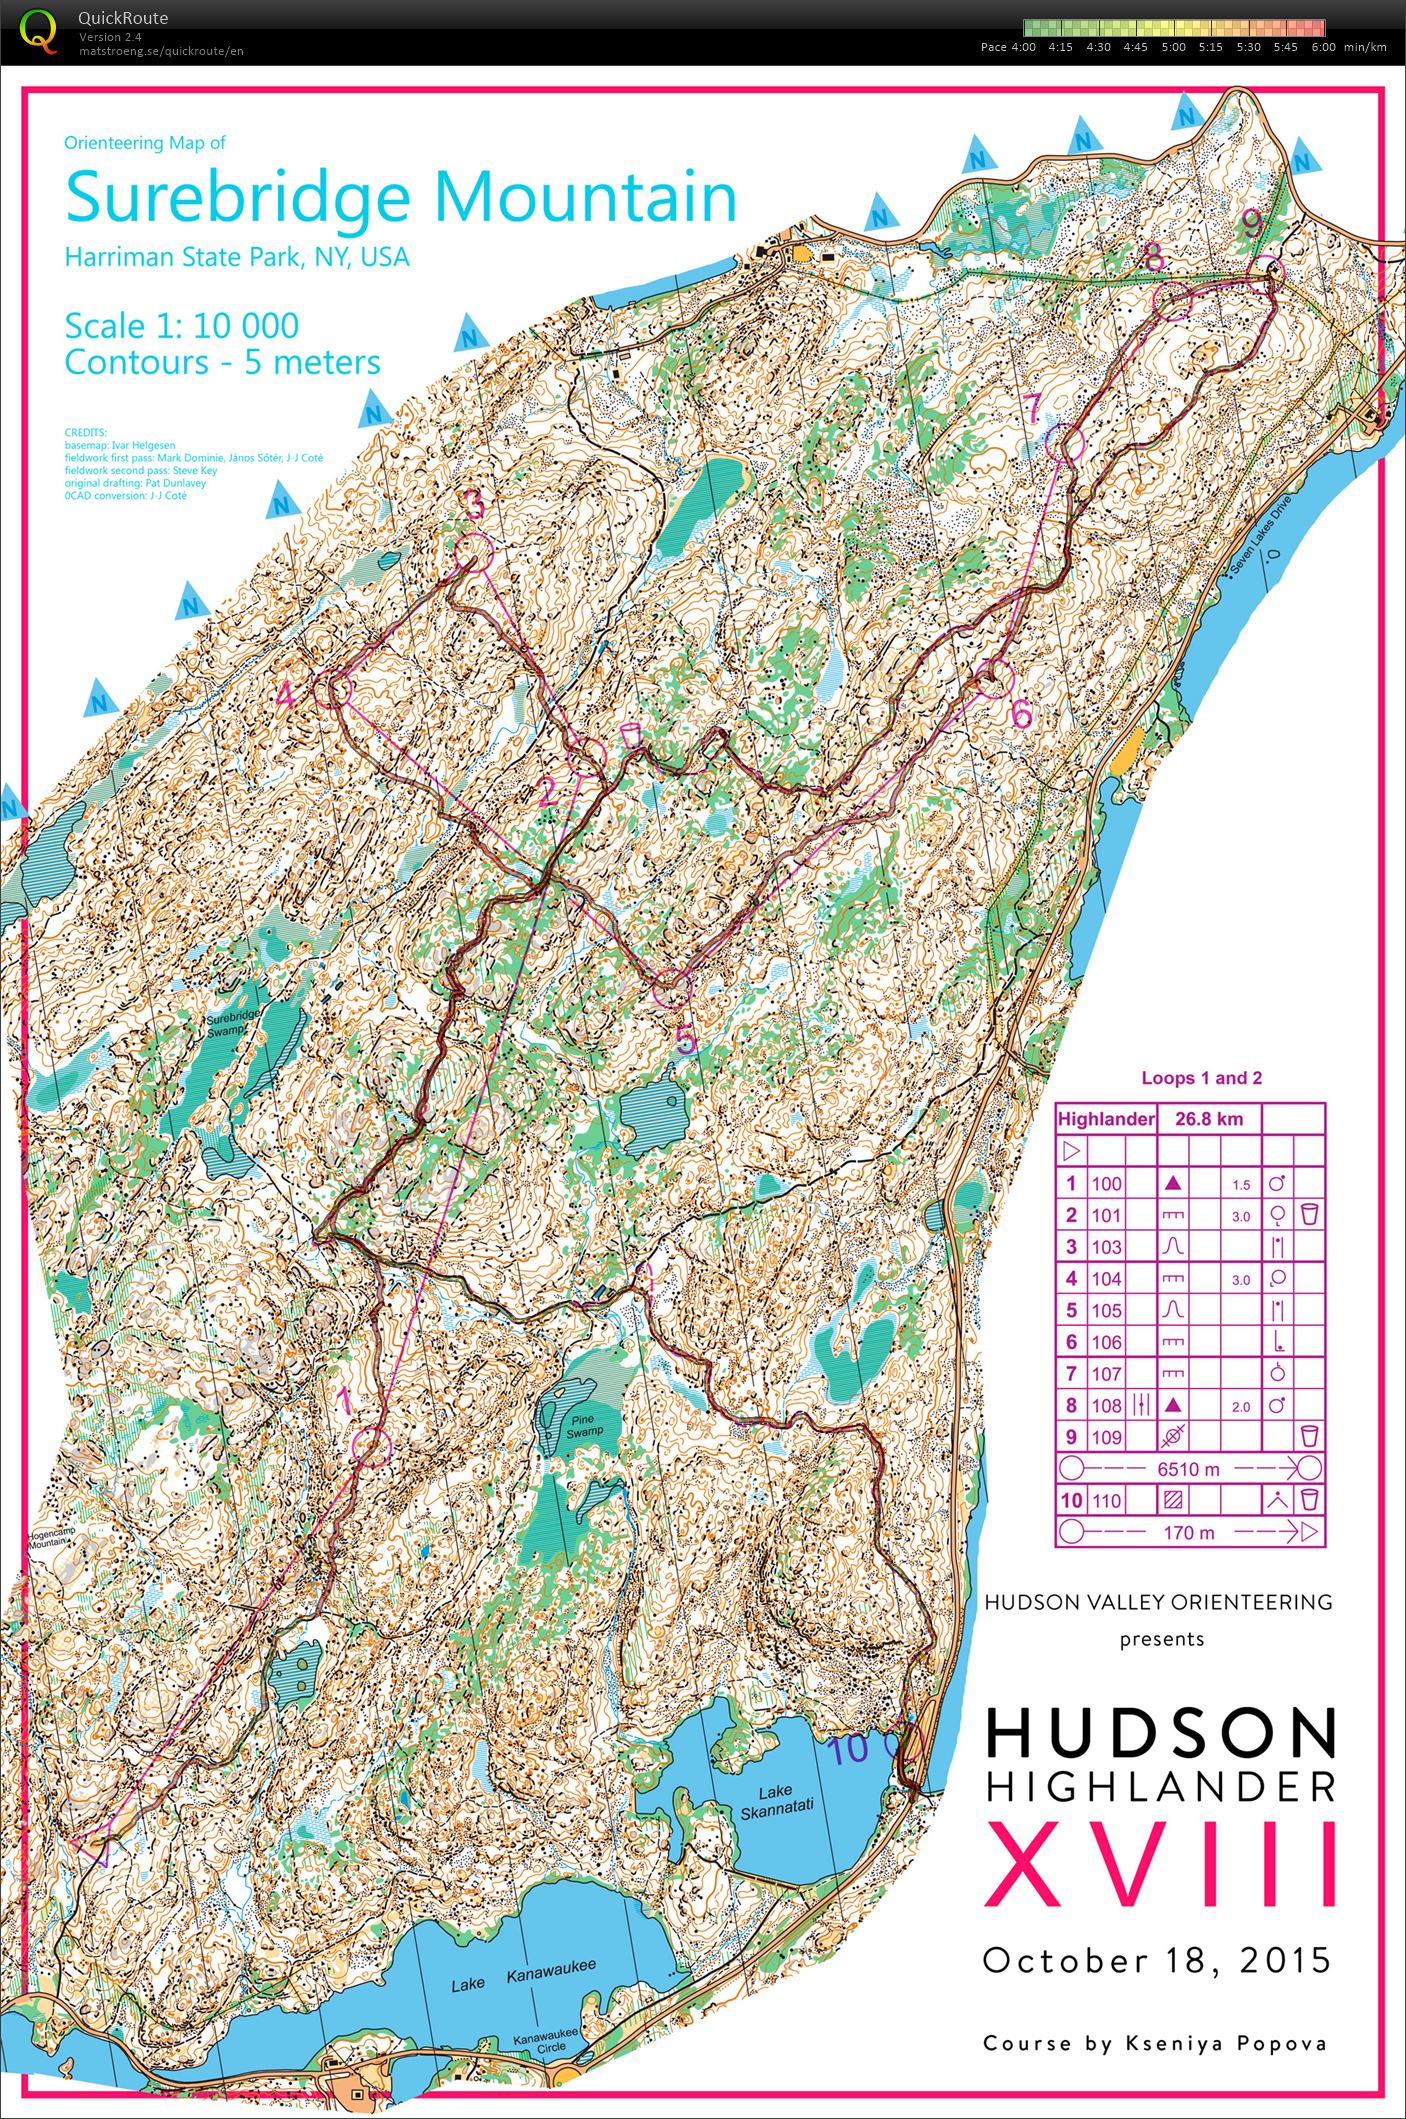 Hudson Highlander Loop 1 and Trail run (18/10/2015)